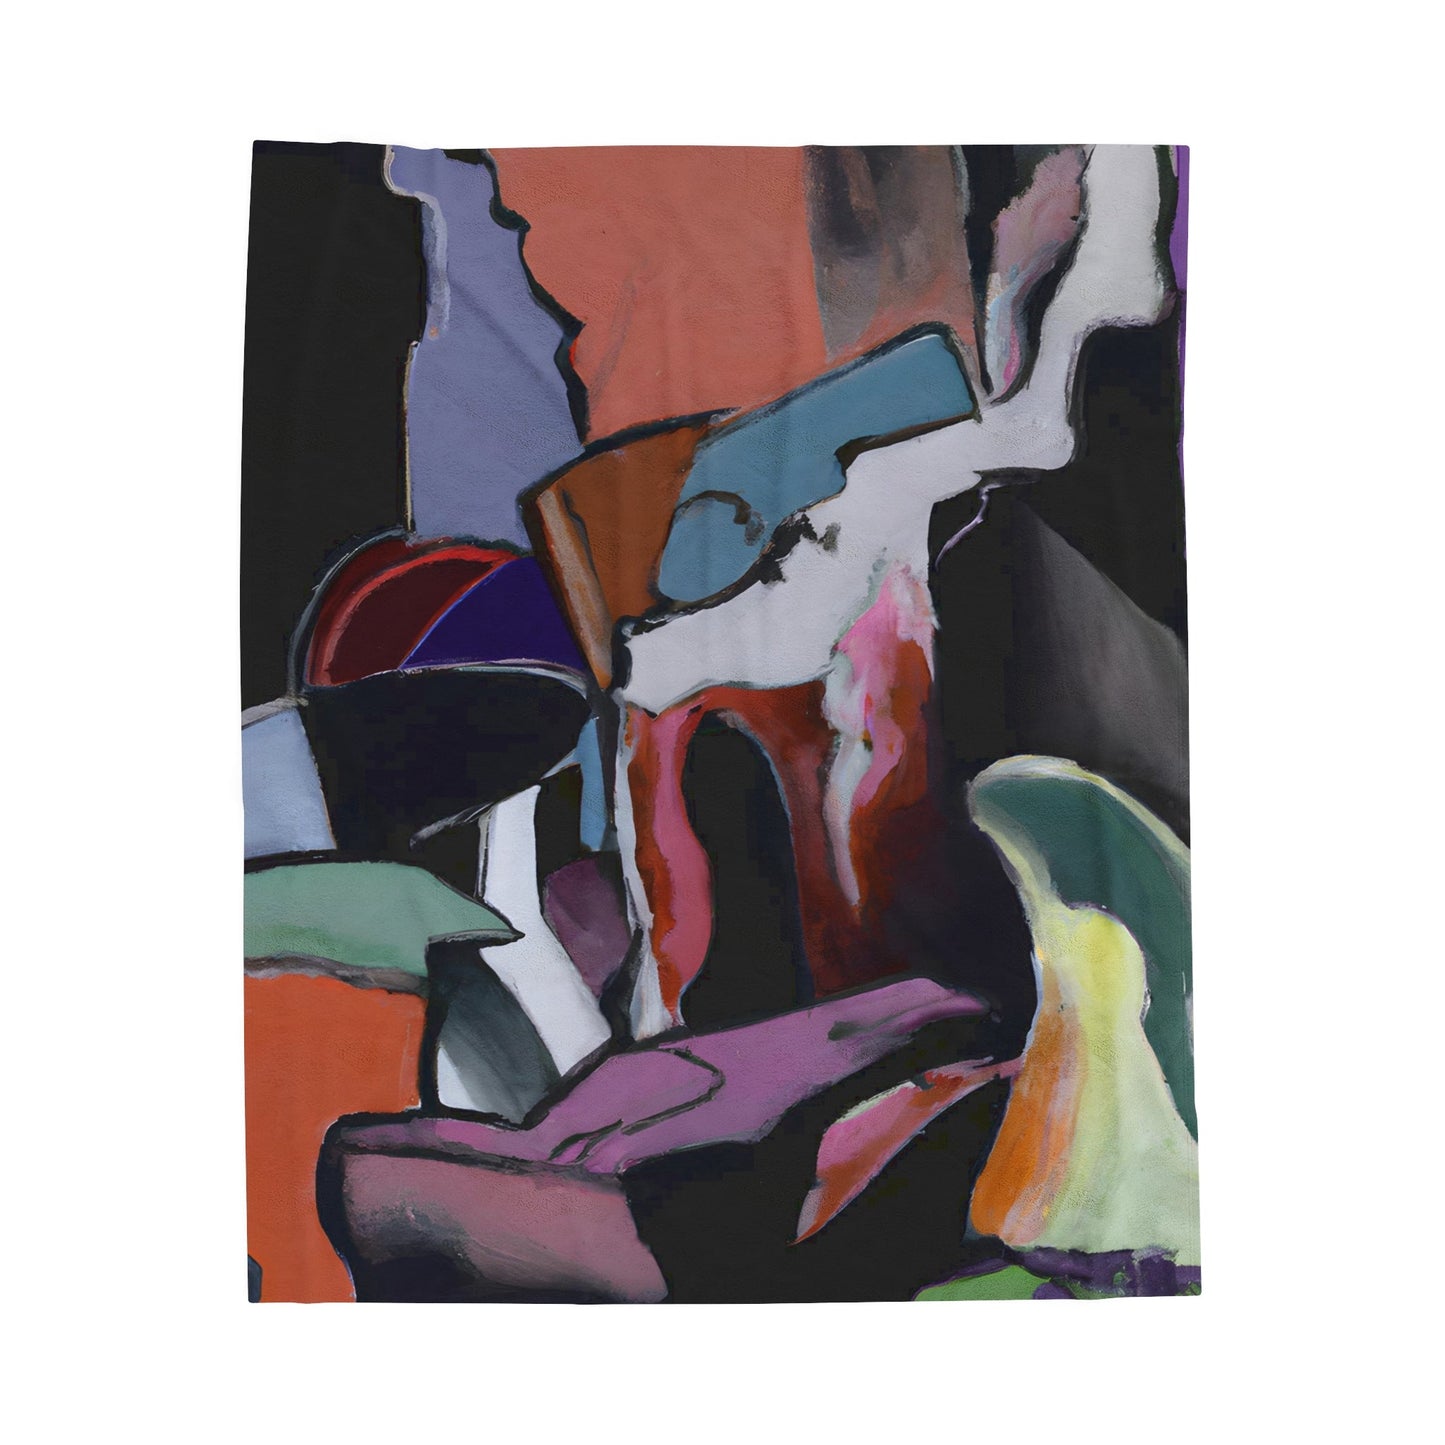 Muse Retrochild - Plush Blanket-Plush Blankets-Mr.Zao - Krazy Art Gallery